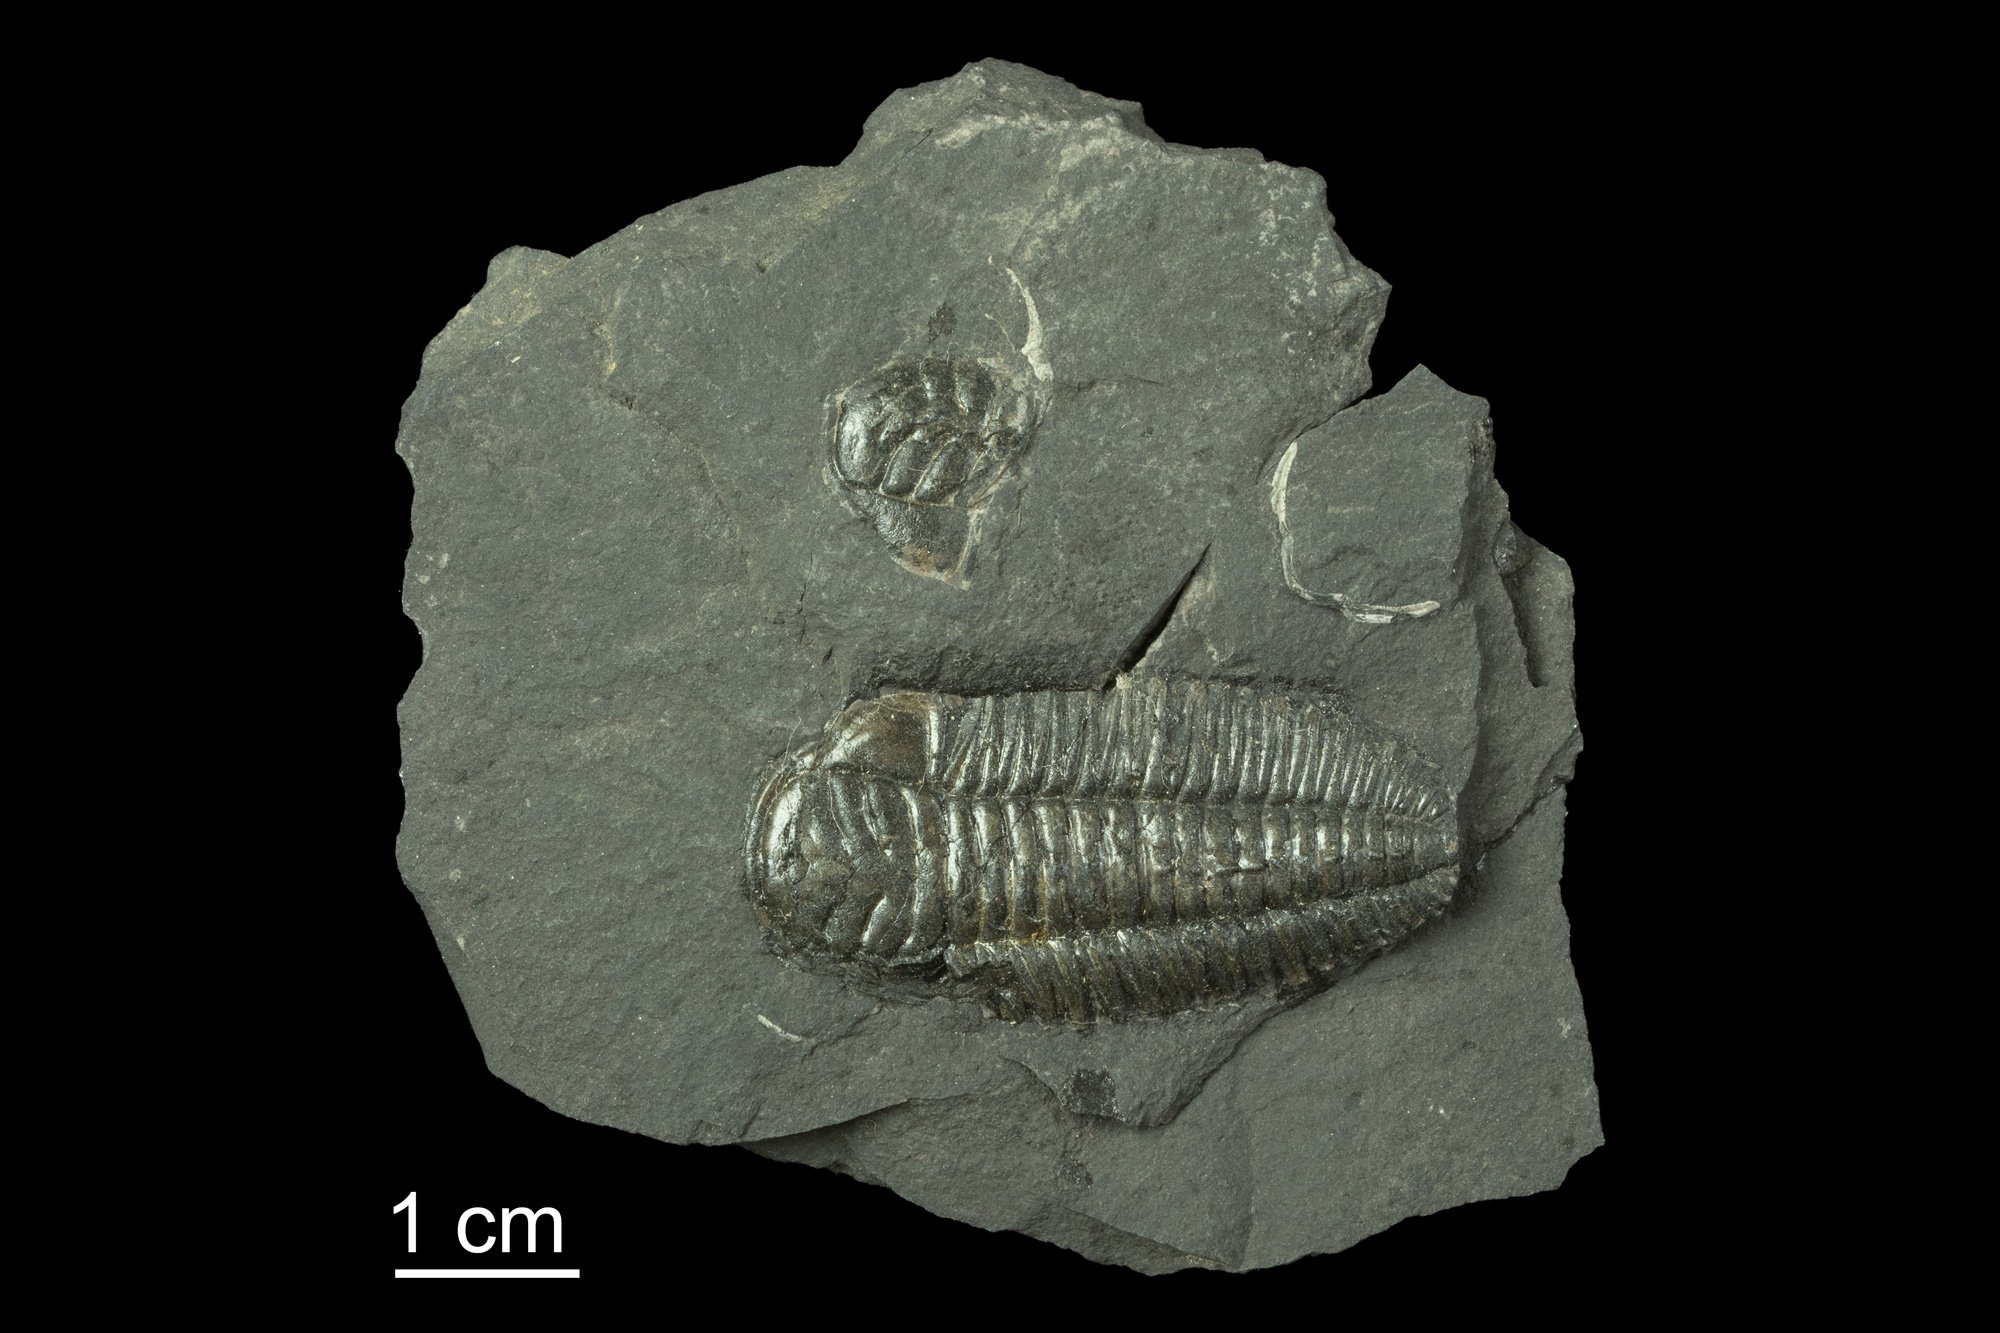 Photograph of a fossil specimen of the trilobite Triarthrus eatoni.